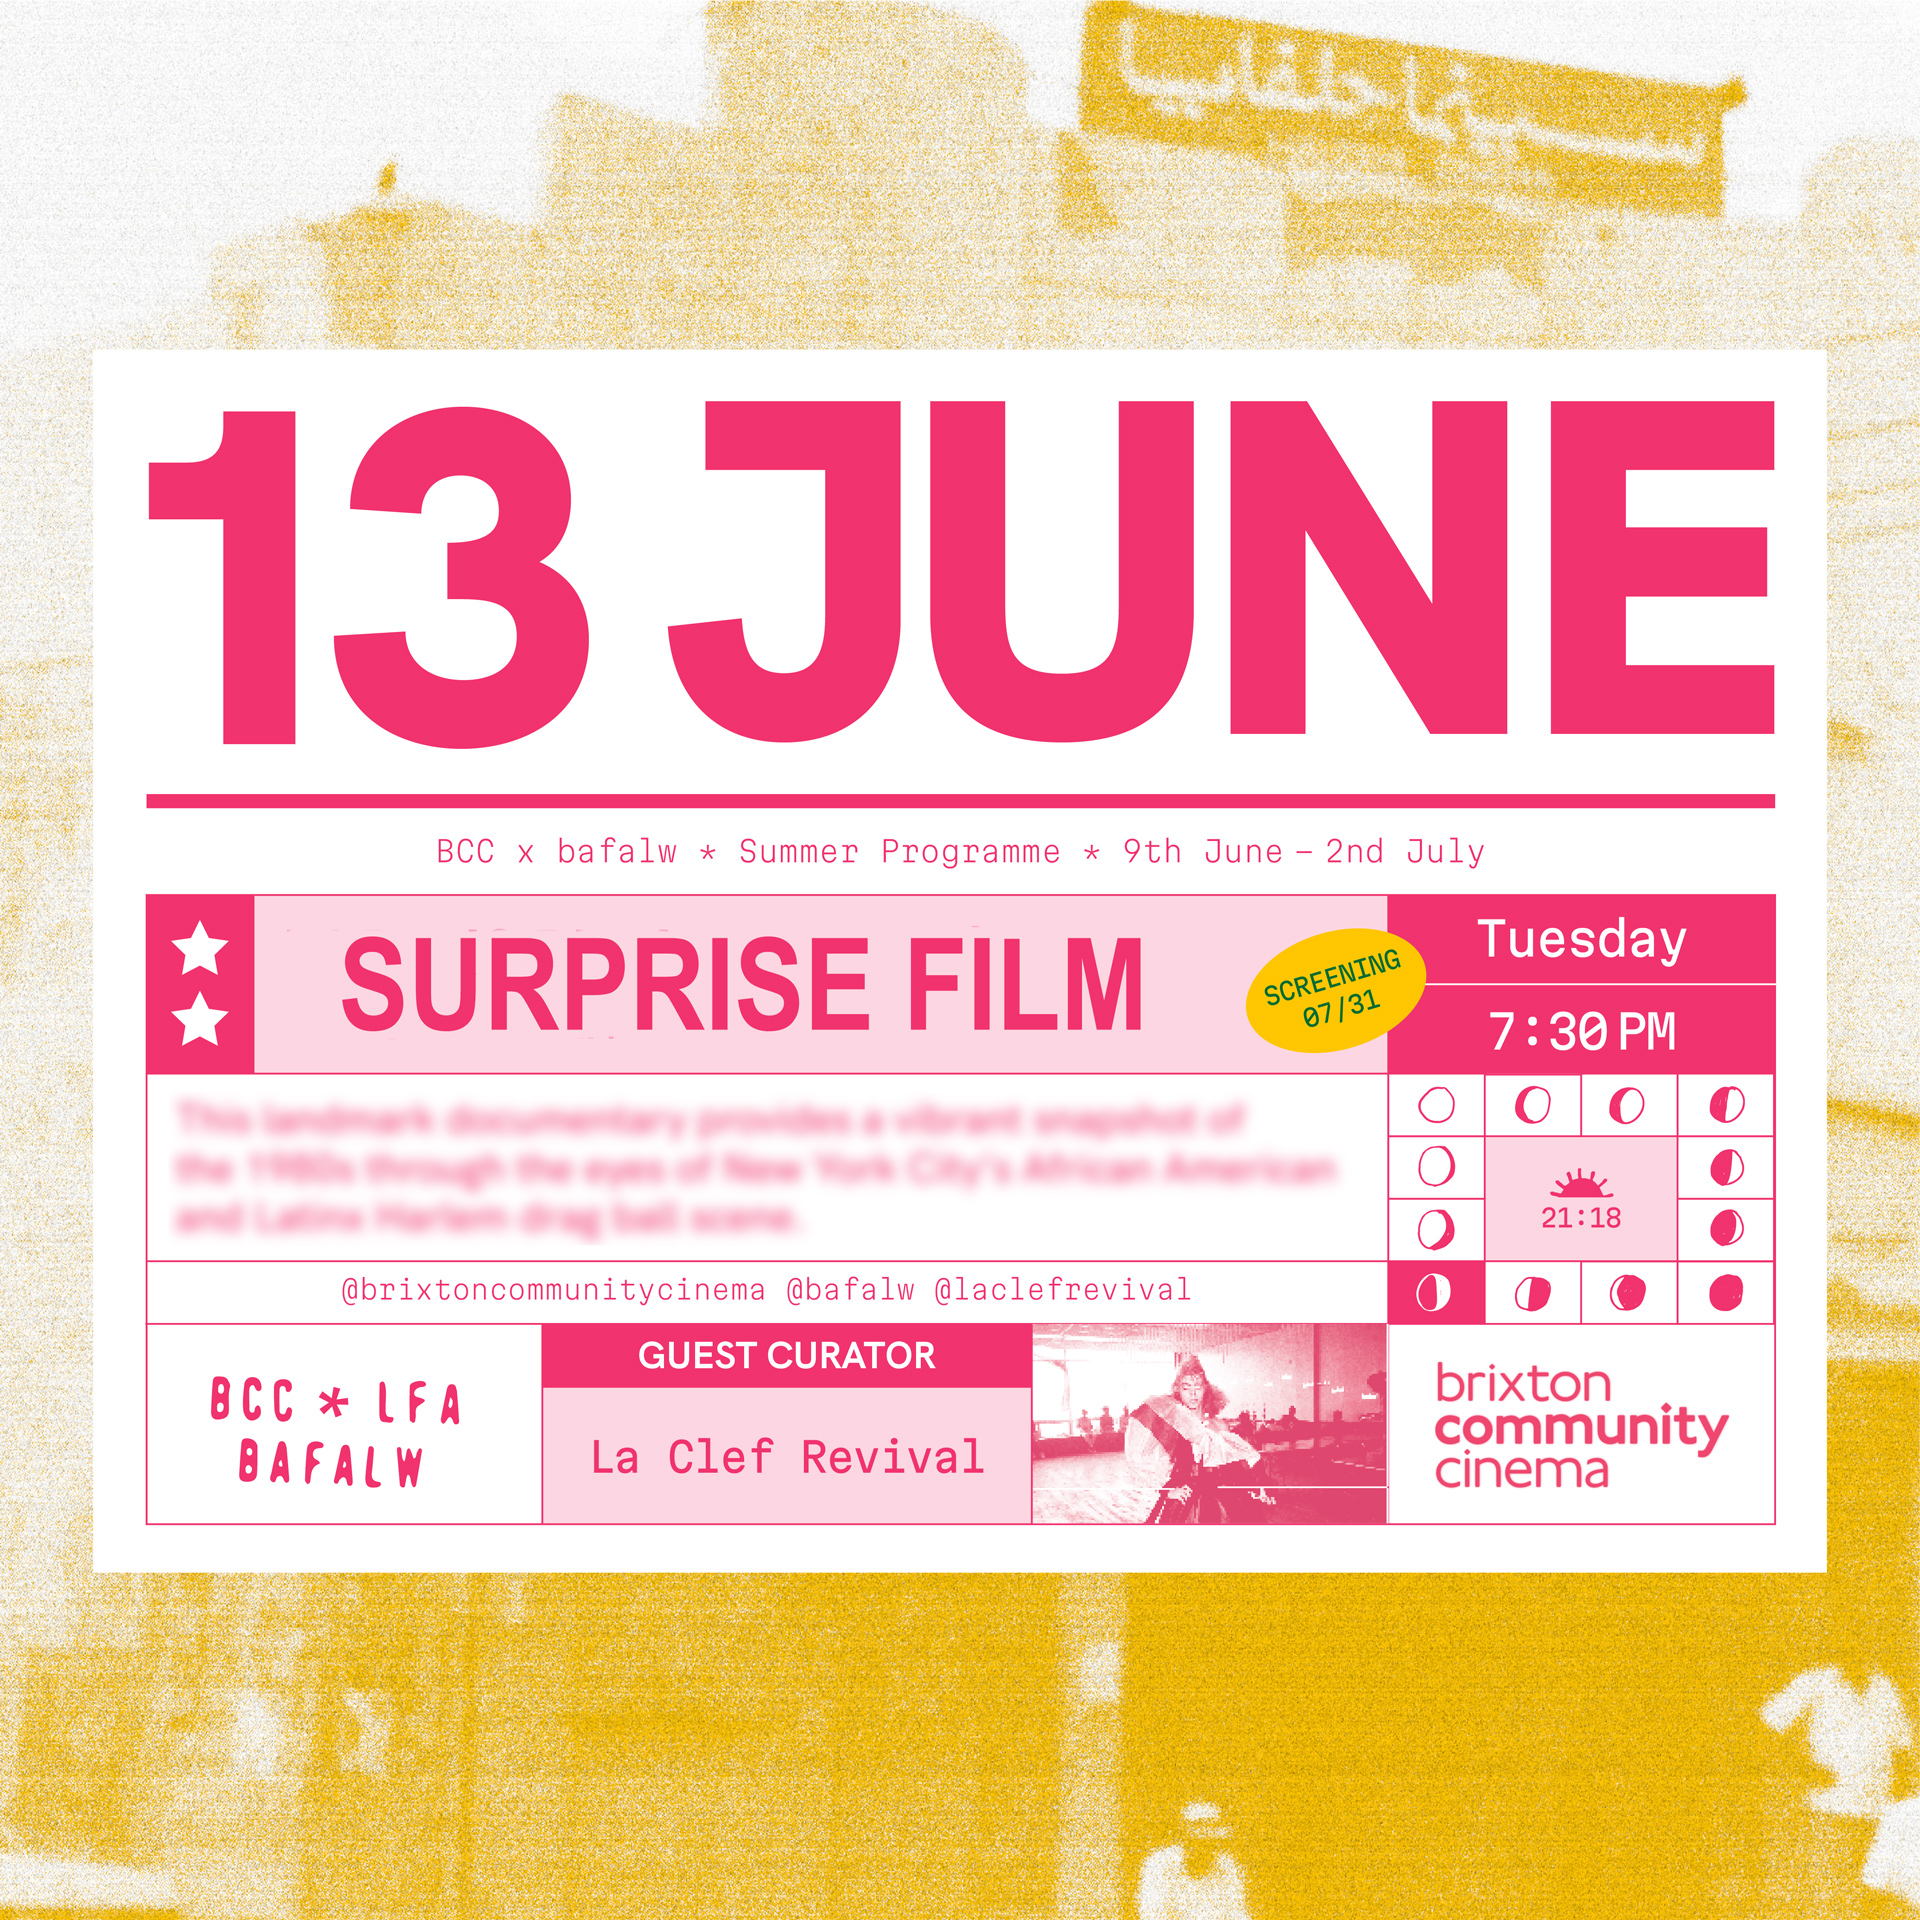 Brixton Community Cinema: La Clef Revival presents a surprise film (13th of June)